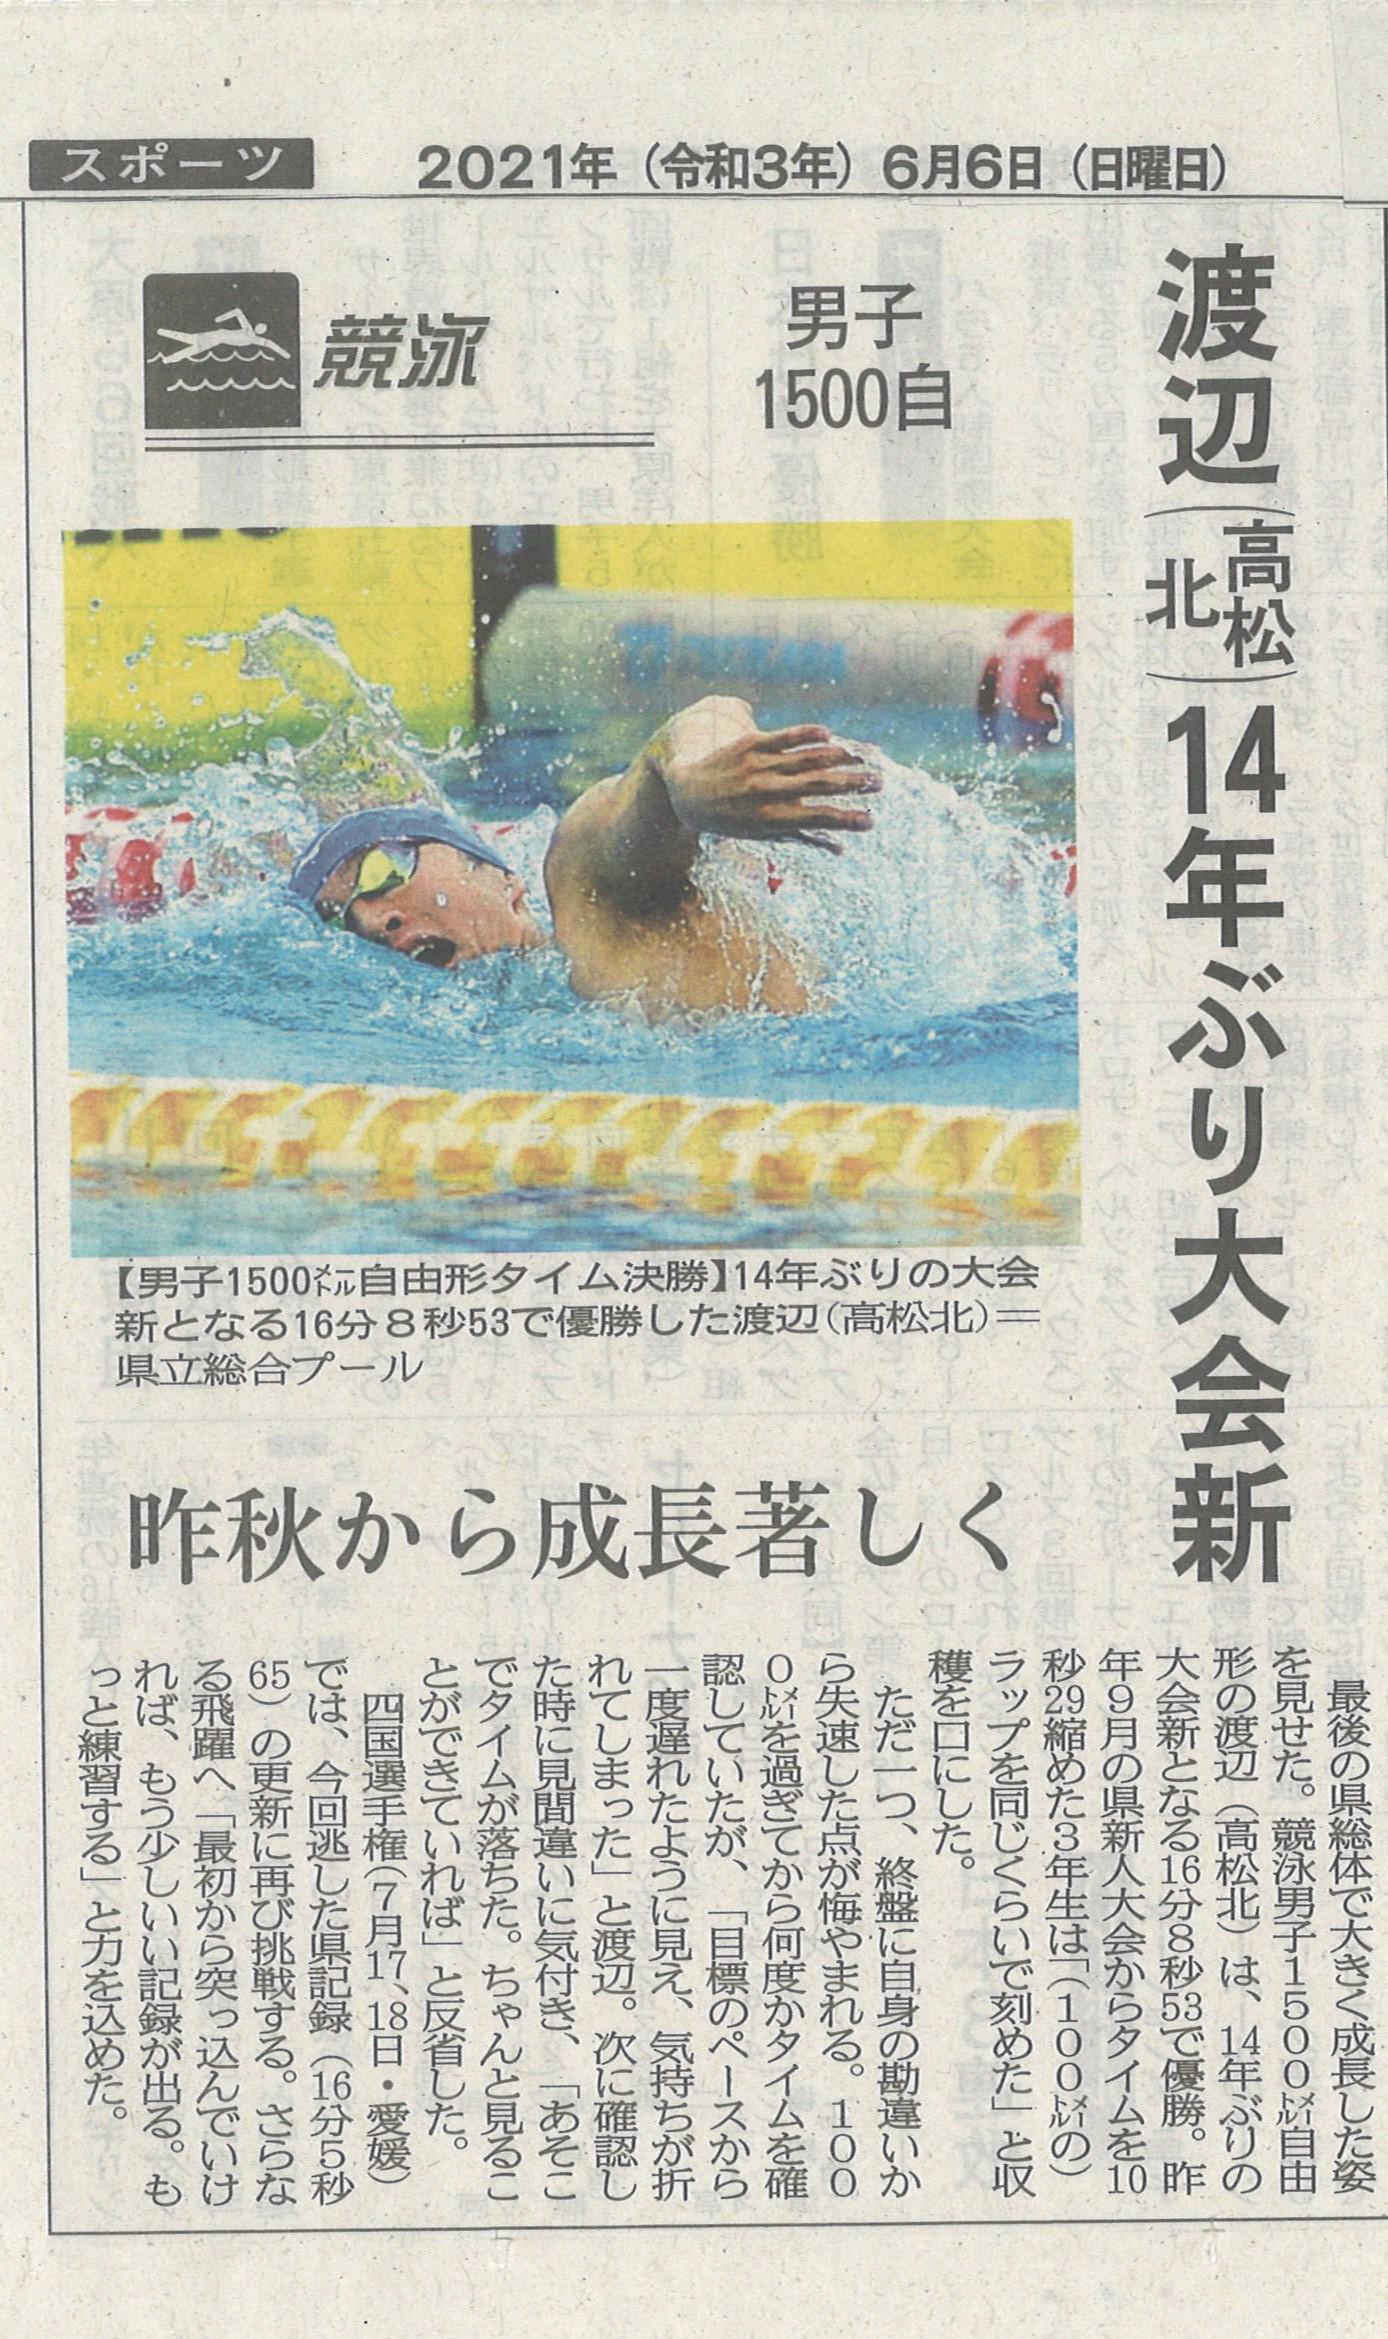 https://www.sanda-swimming.com/news/syouta2021.6.jpg